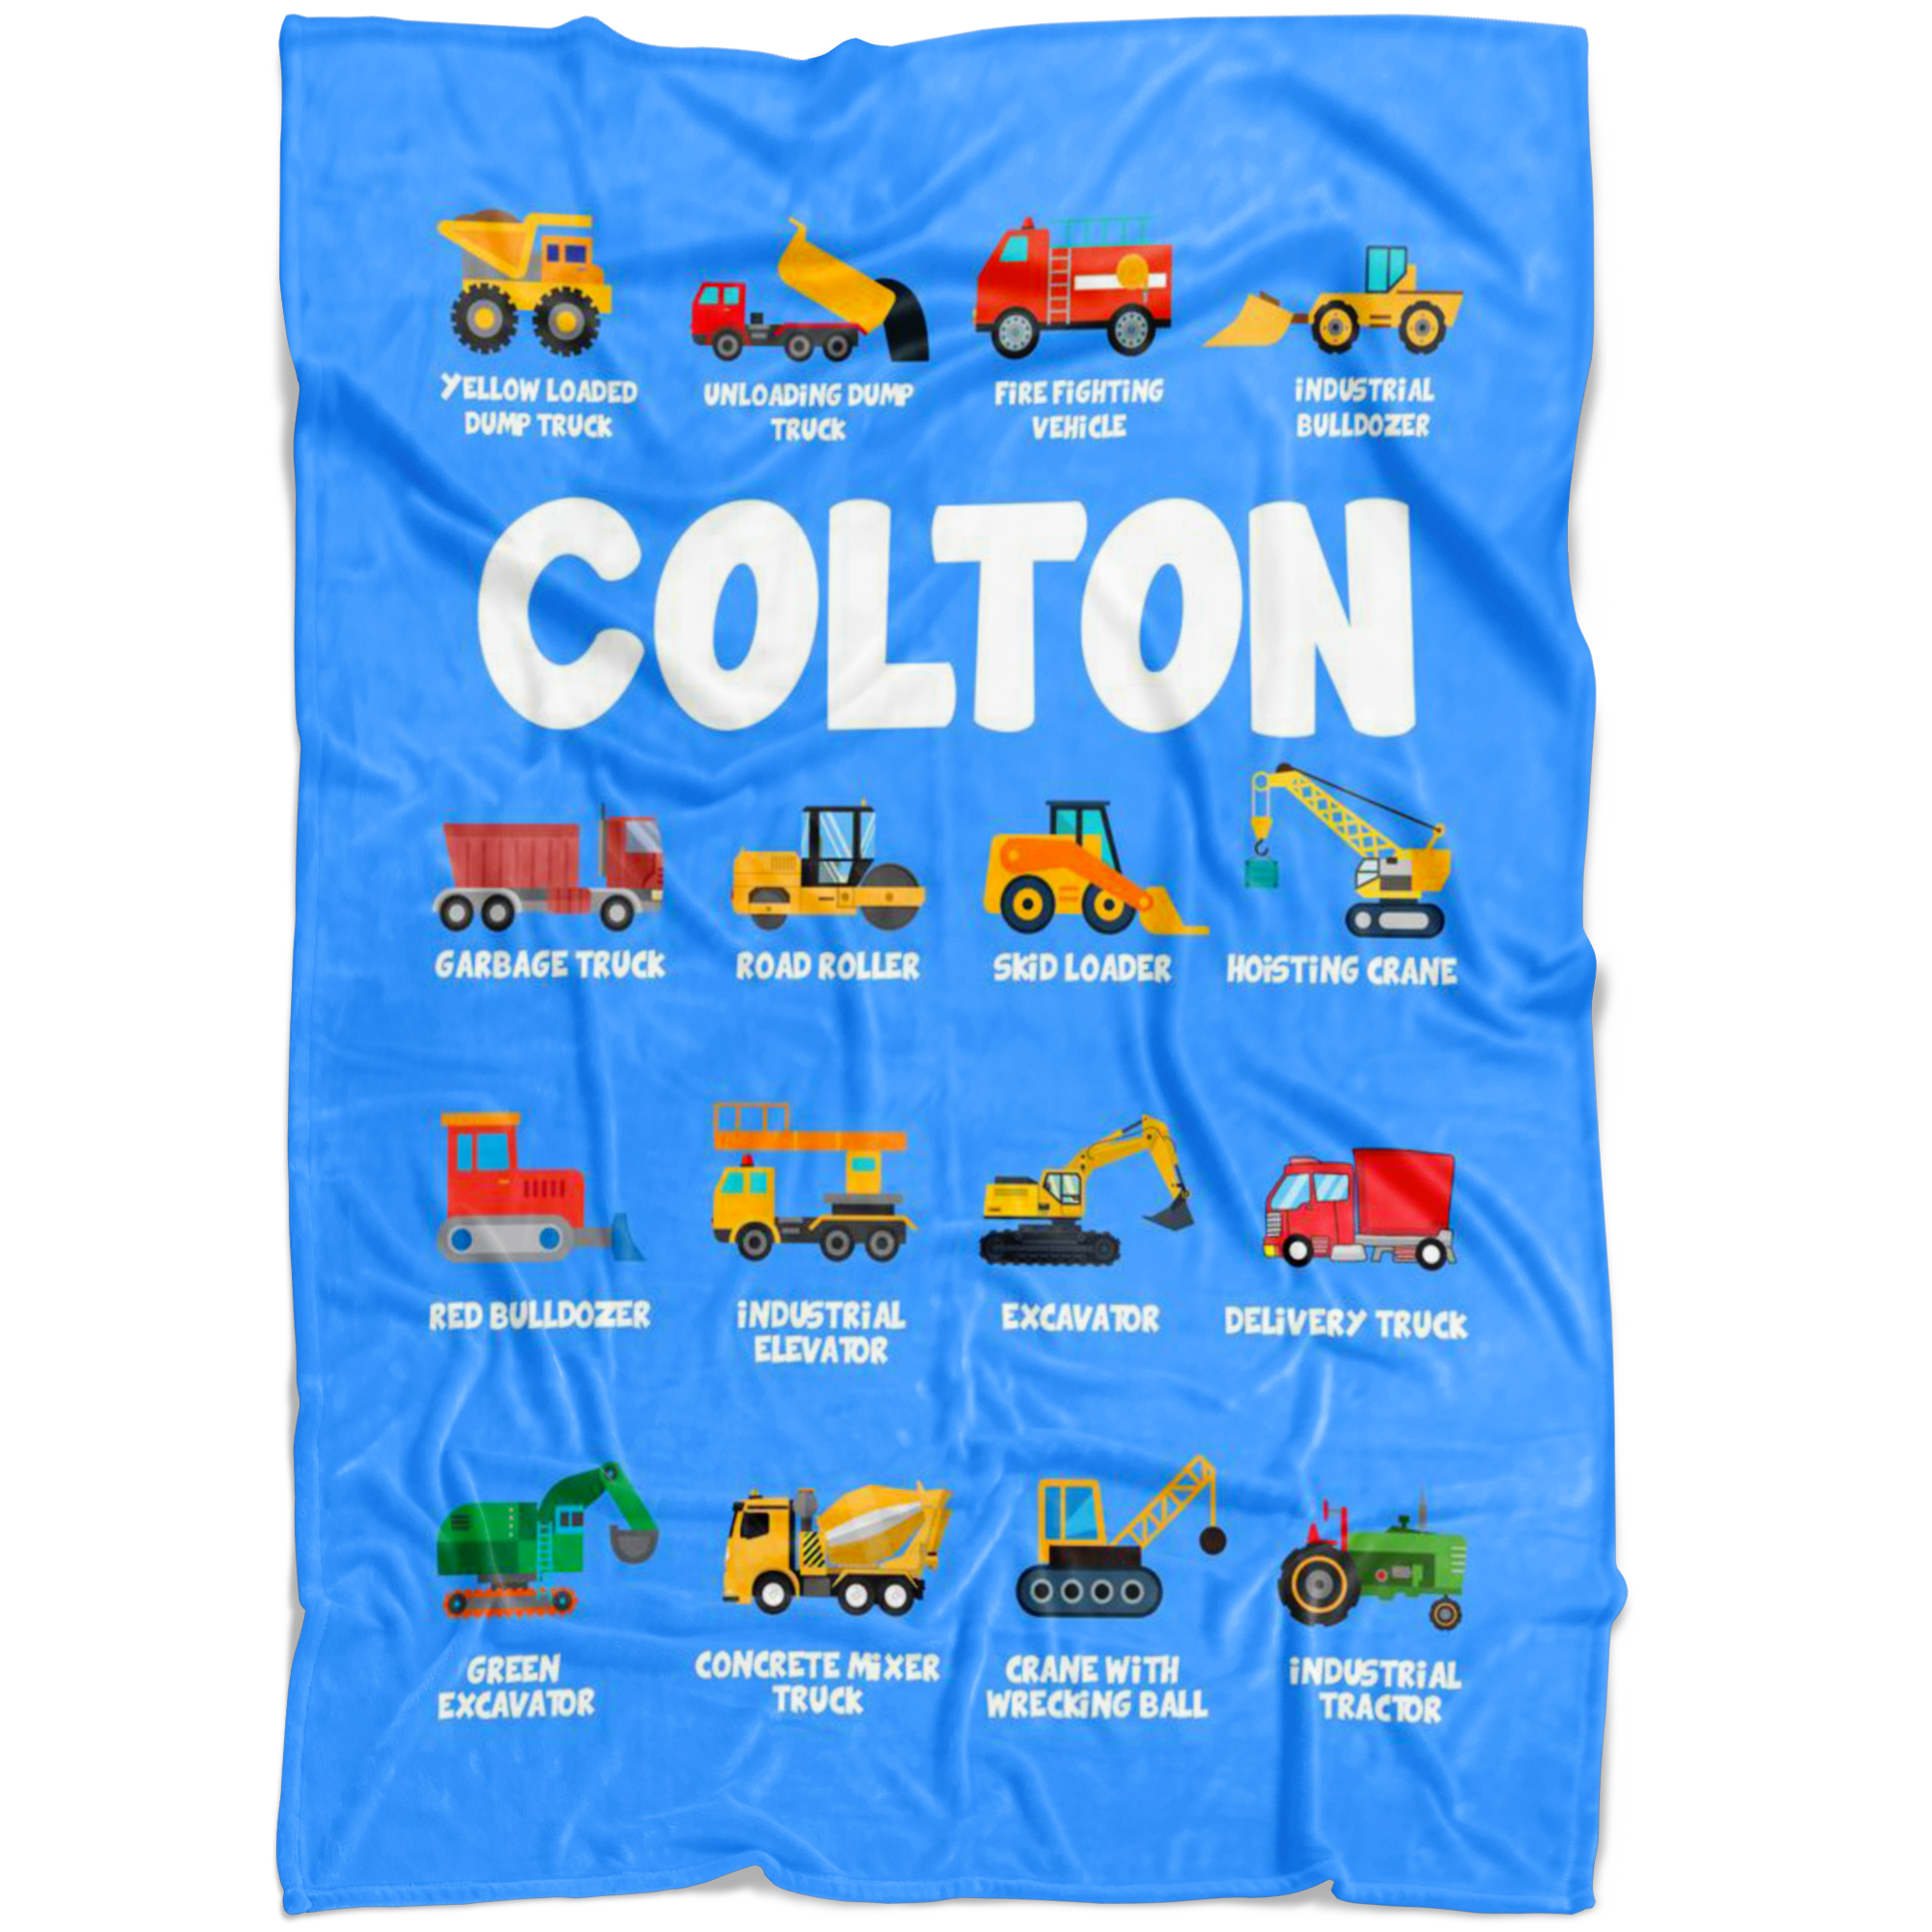 COLTON Construction Blanket Blue